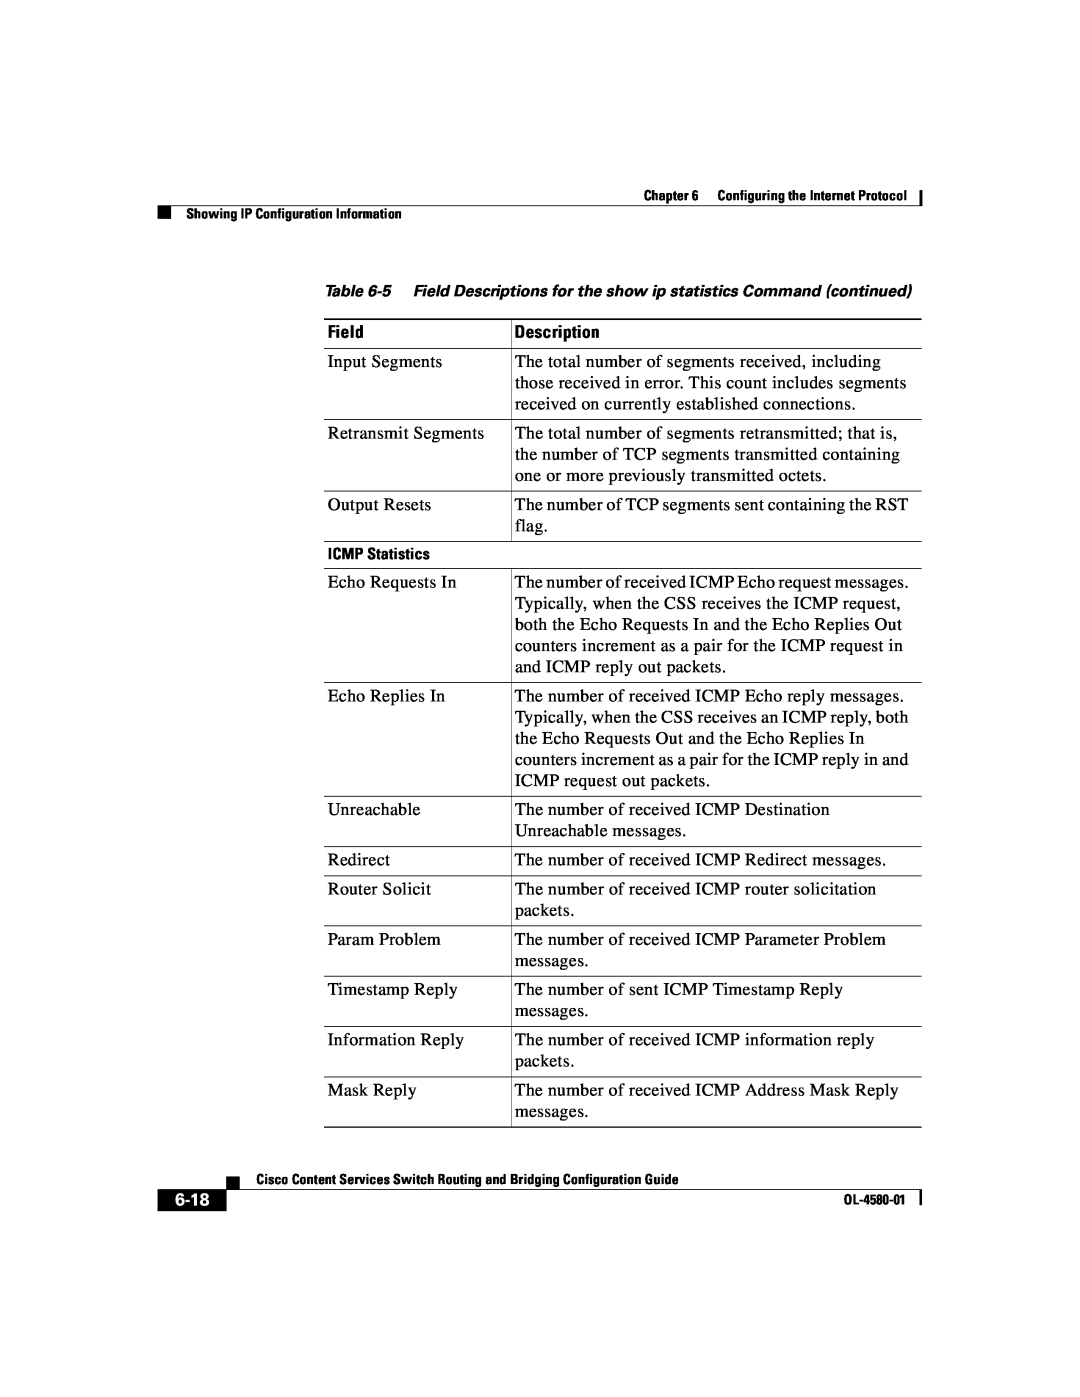 Cisco Systems OL-4580-01 manual Field, Description, 6-18, ICMP Statistics 